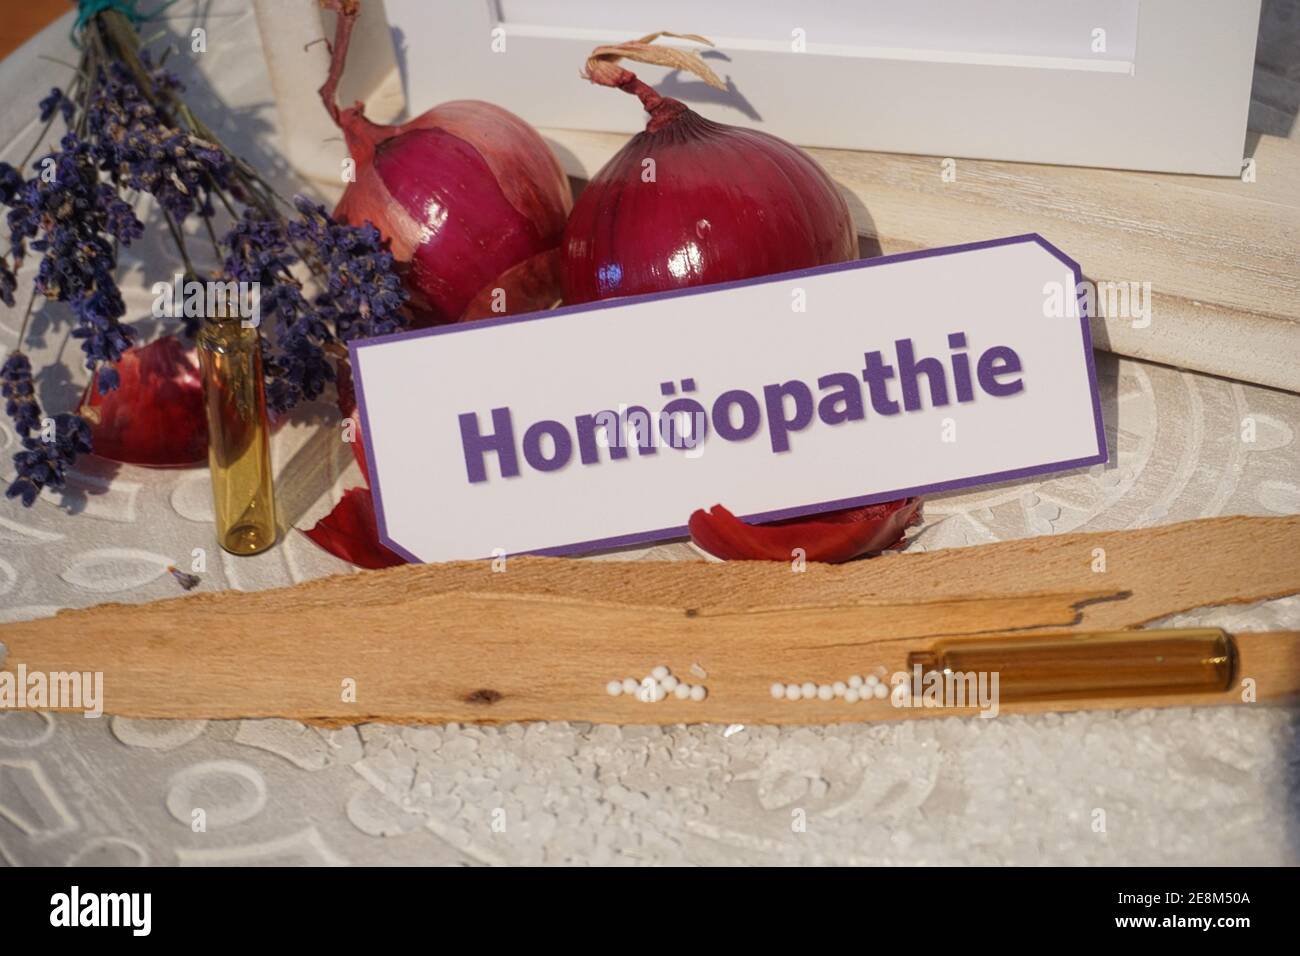 Medicina alternativa de la homeopatía globularia Foto de stock